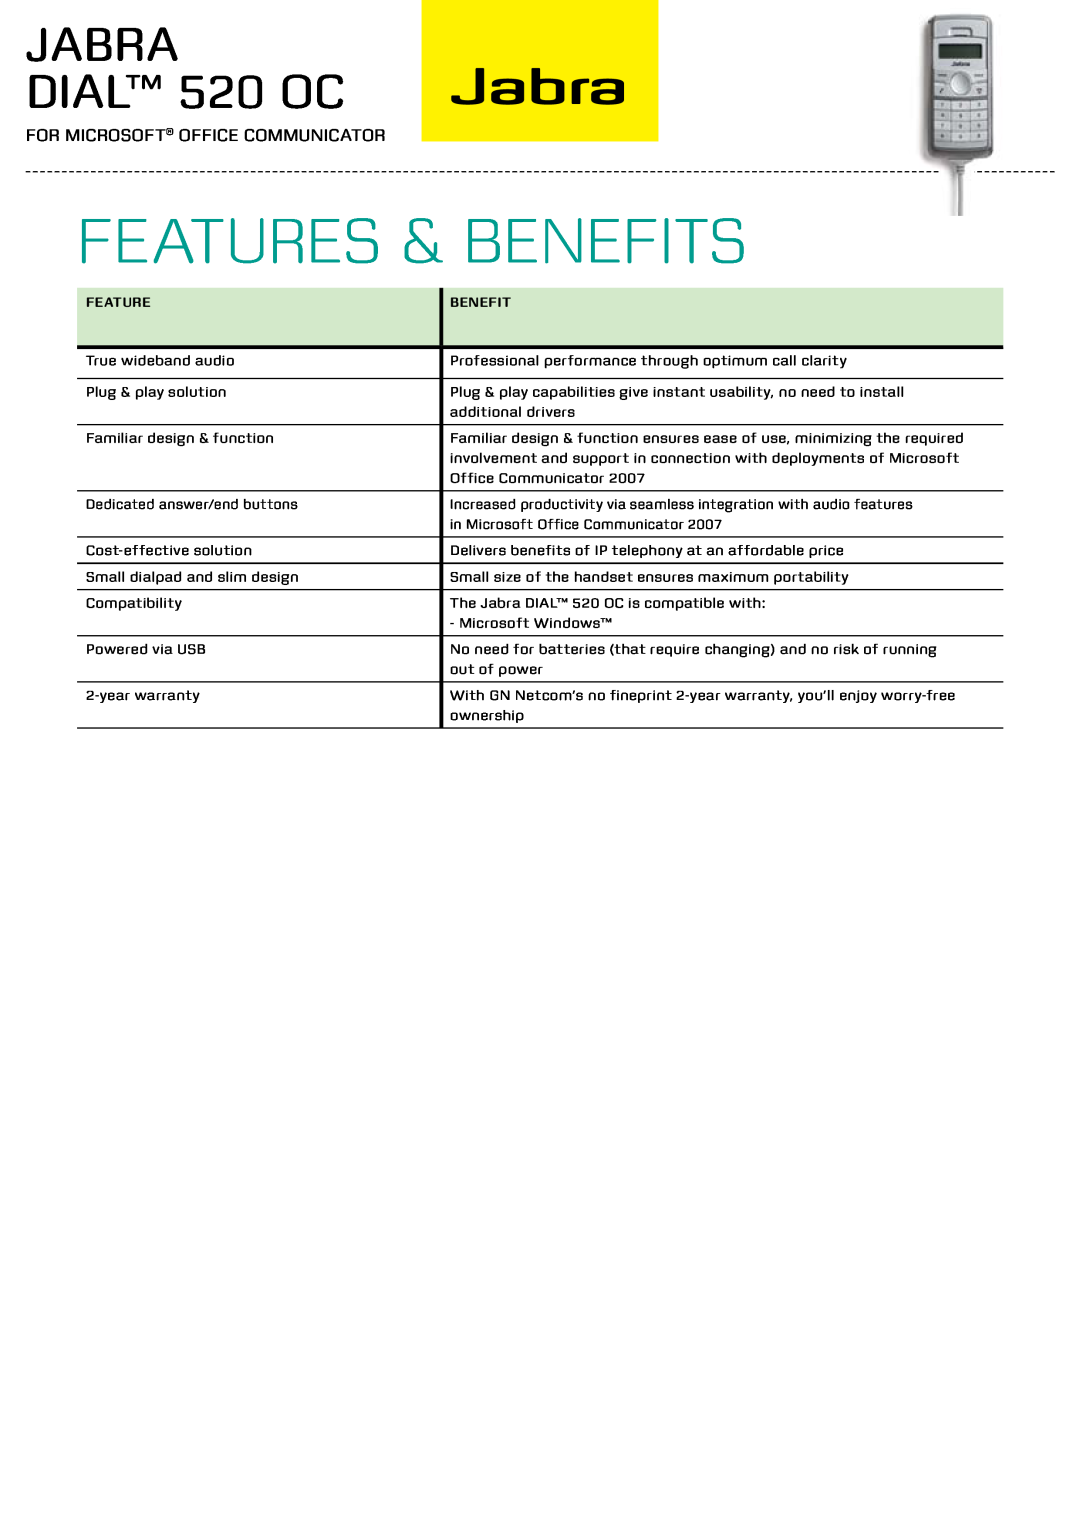 Jabra manual FEATUREs & BENEFITs, Jabra DIAL 520 OC, for Microsoft Office Communicator, Feature, Benefit 